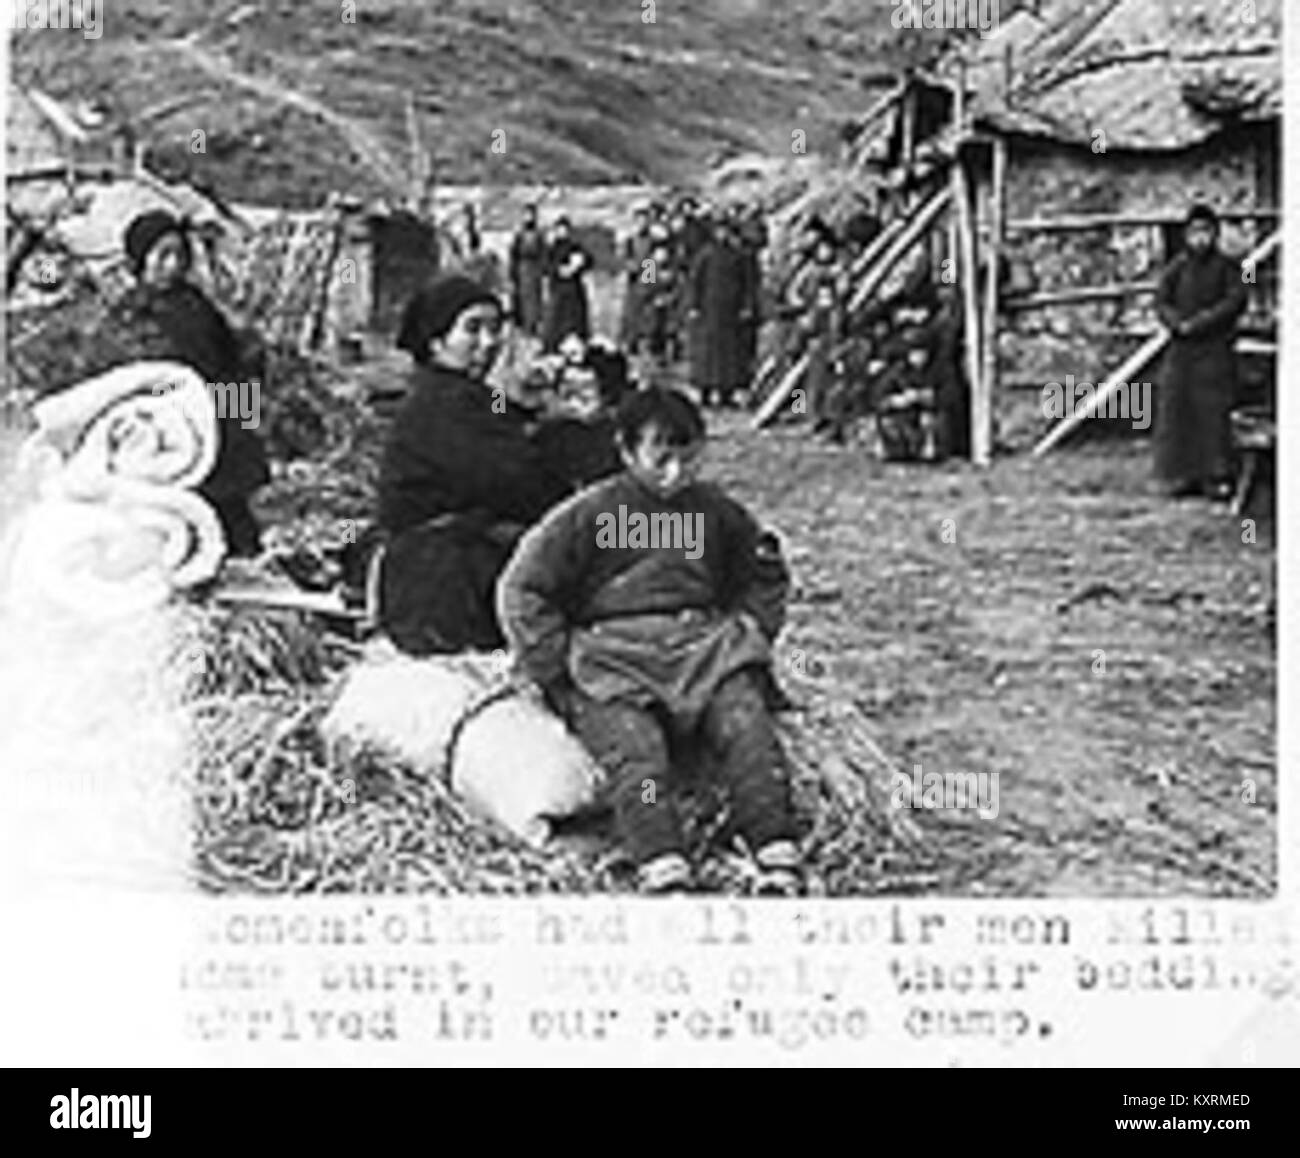 Chinese Women arrive at a refugee camp, Nanjing Massacre Stock Photo